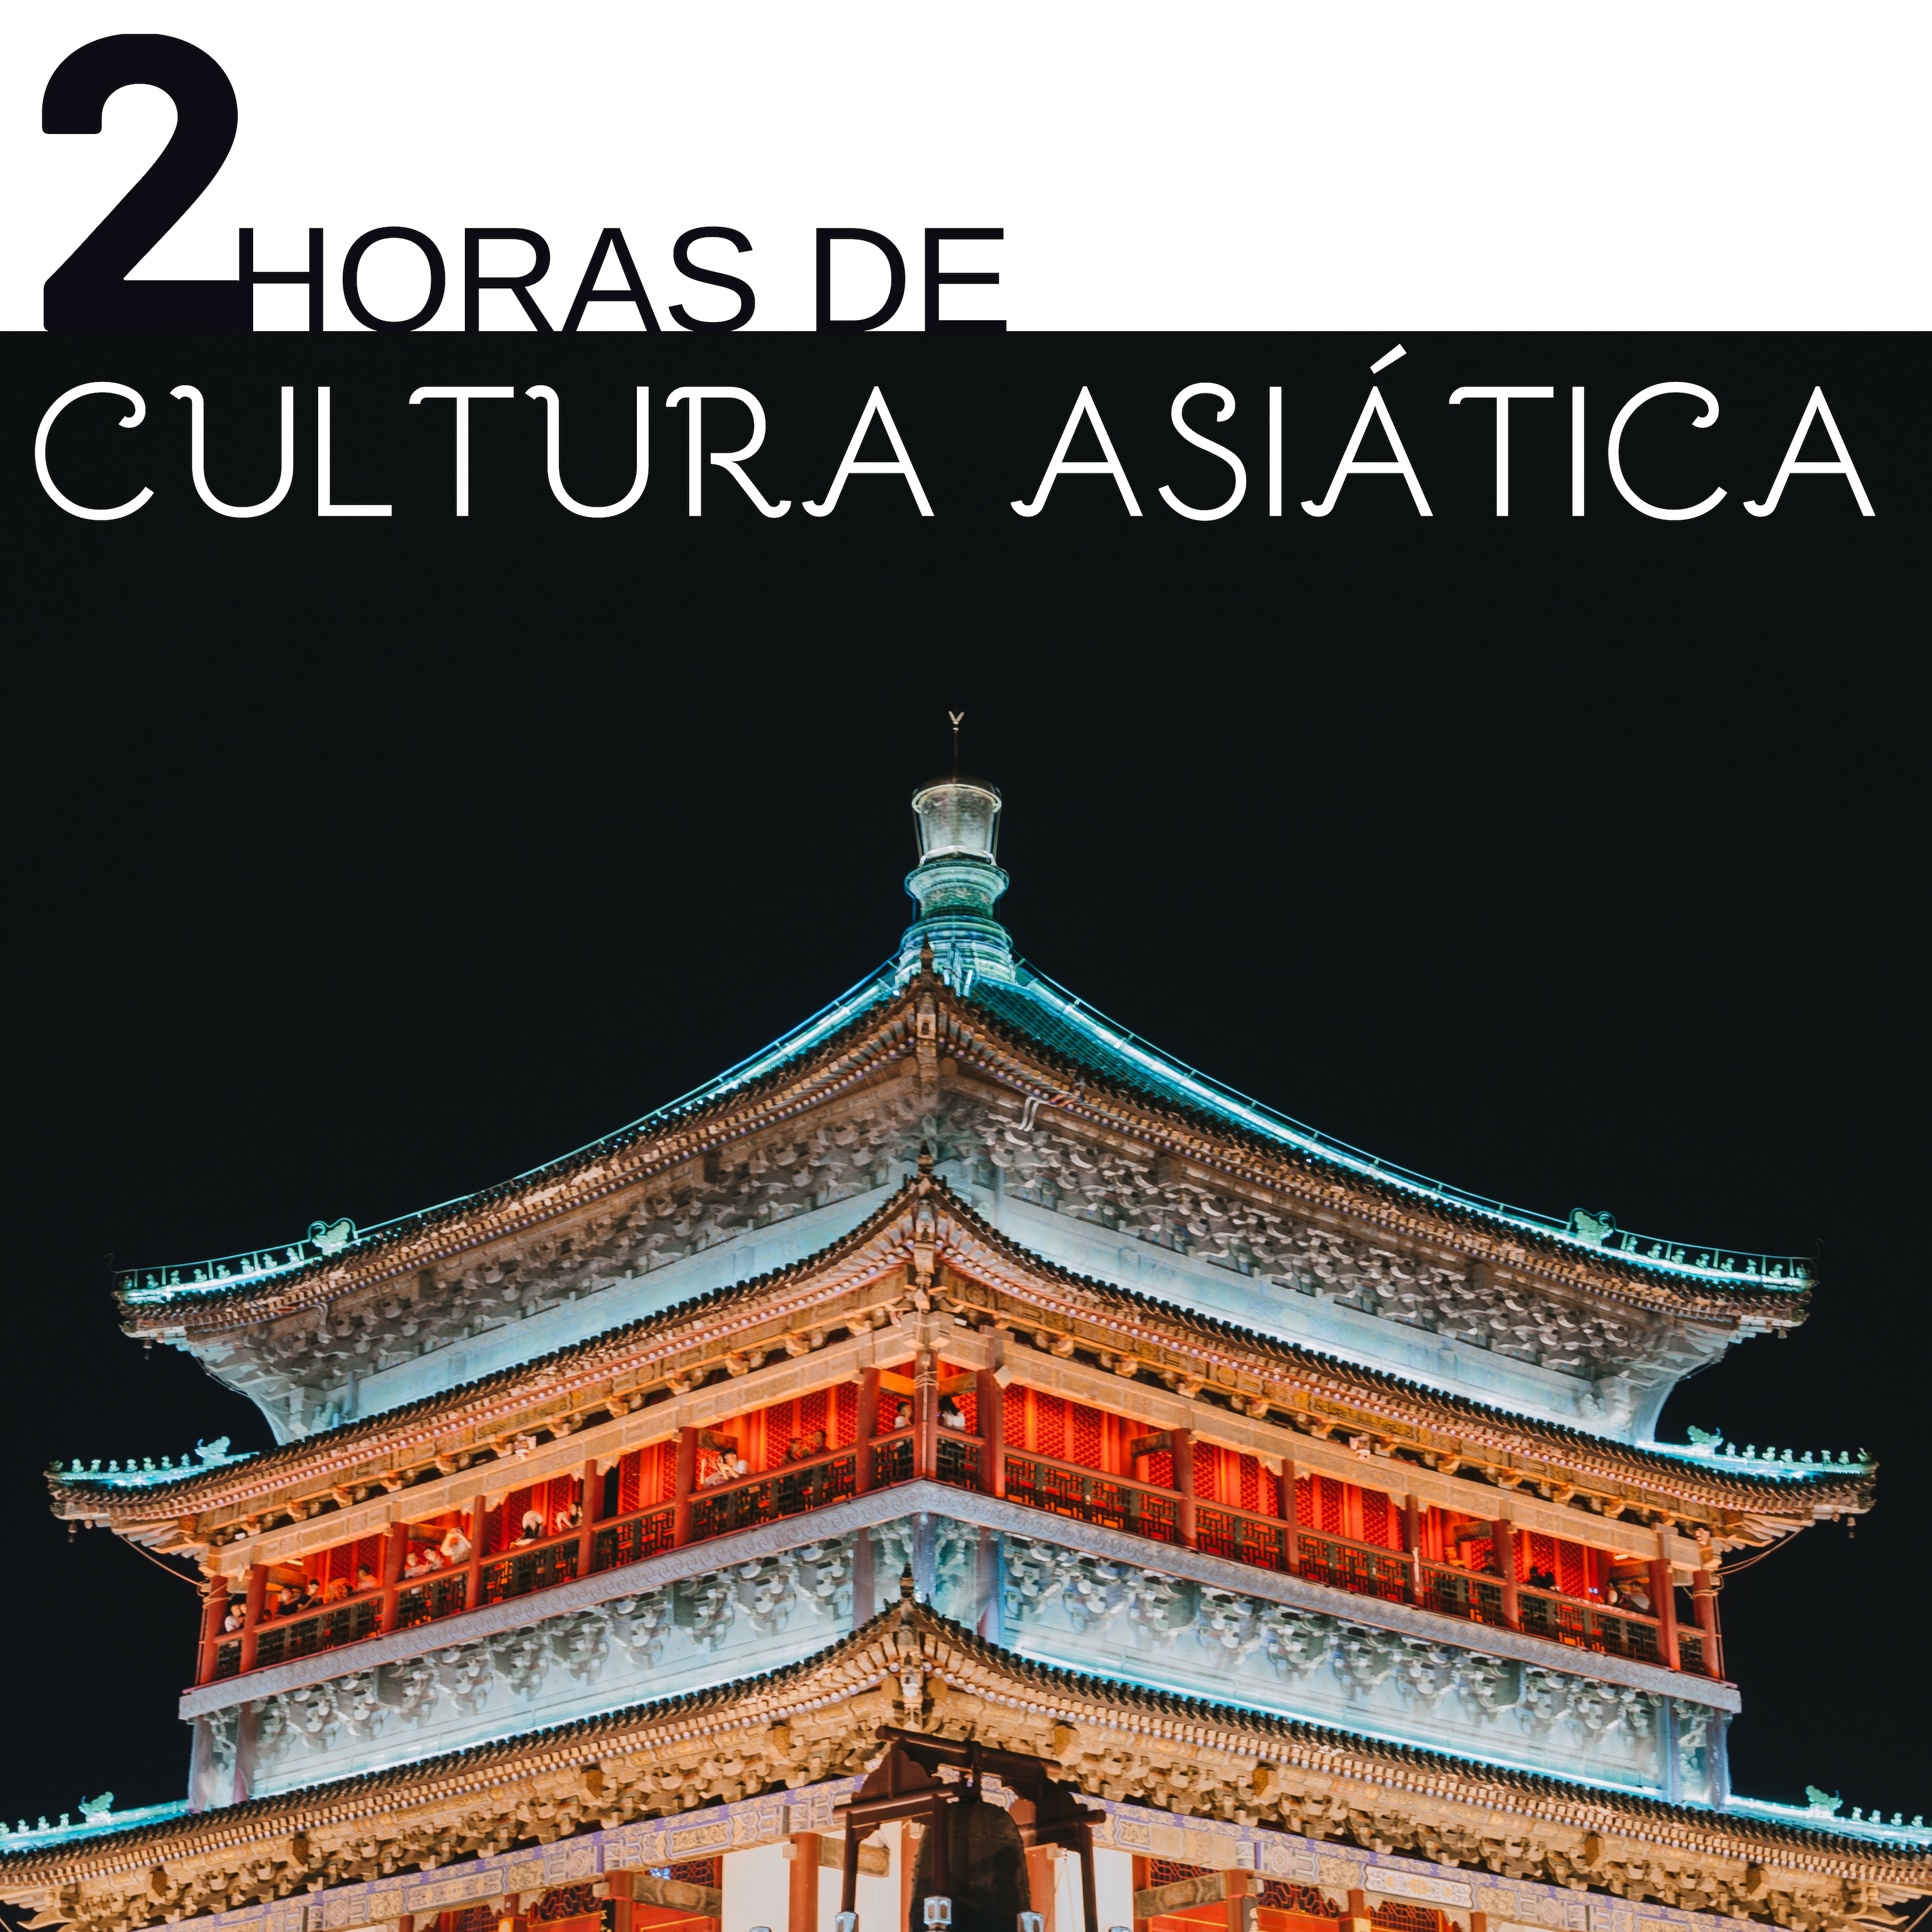 2 Horas de Cultura Asia tica  Mu sica de Relajacio n Sonidos con Asia ticos